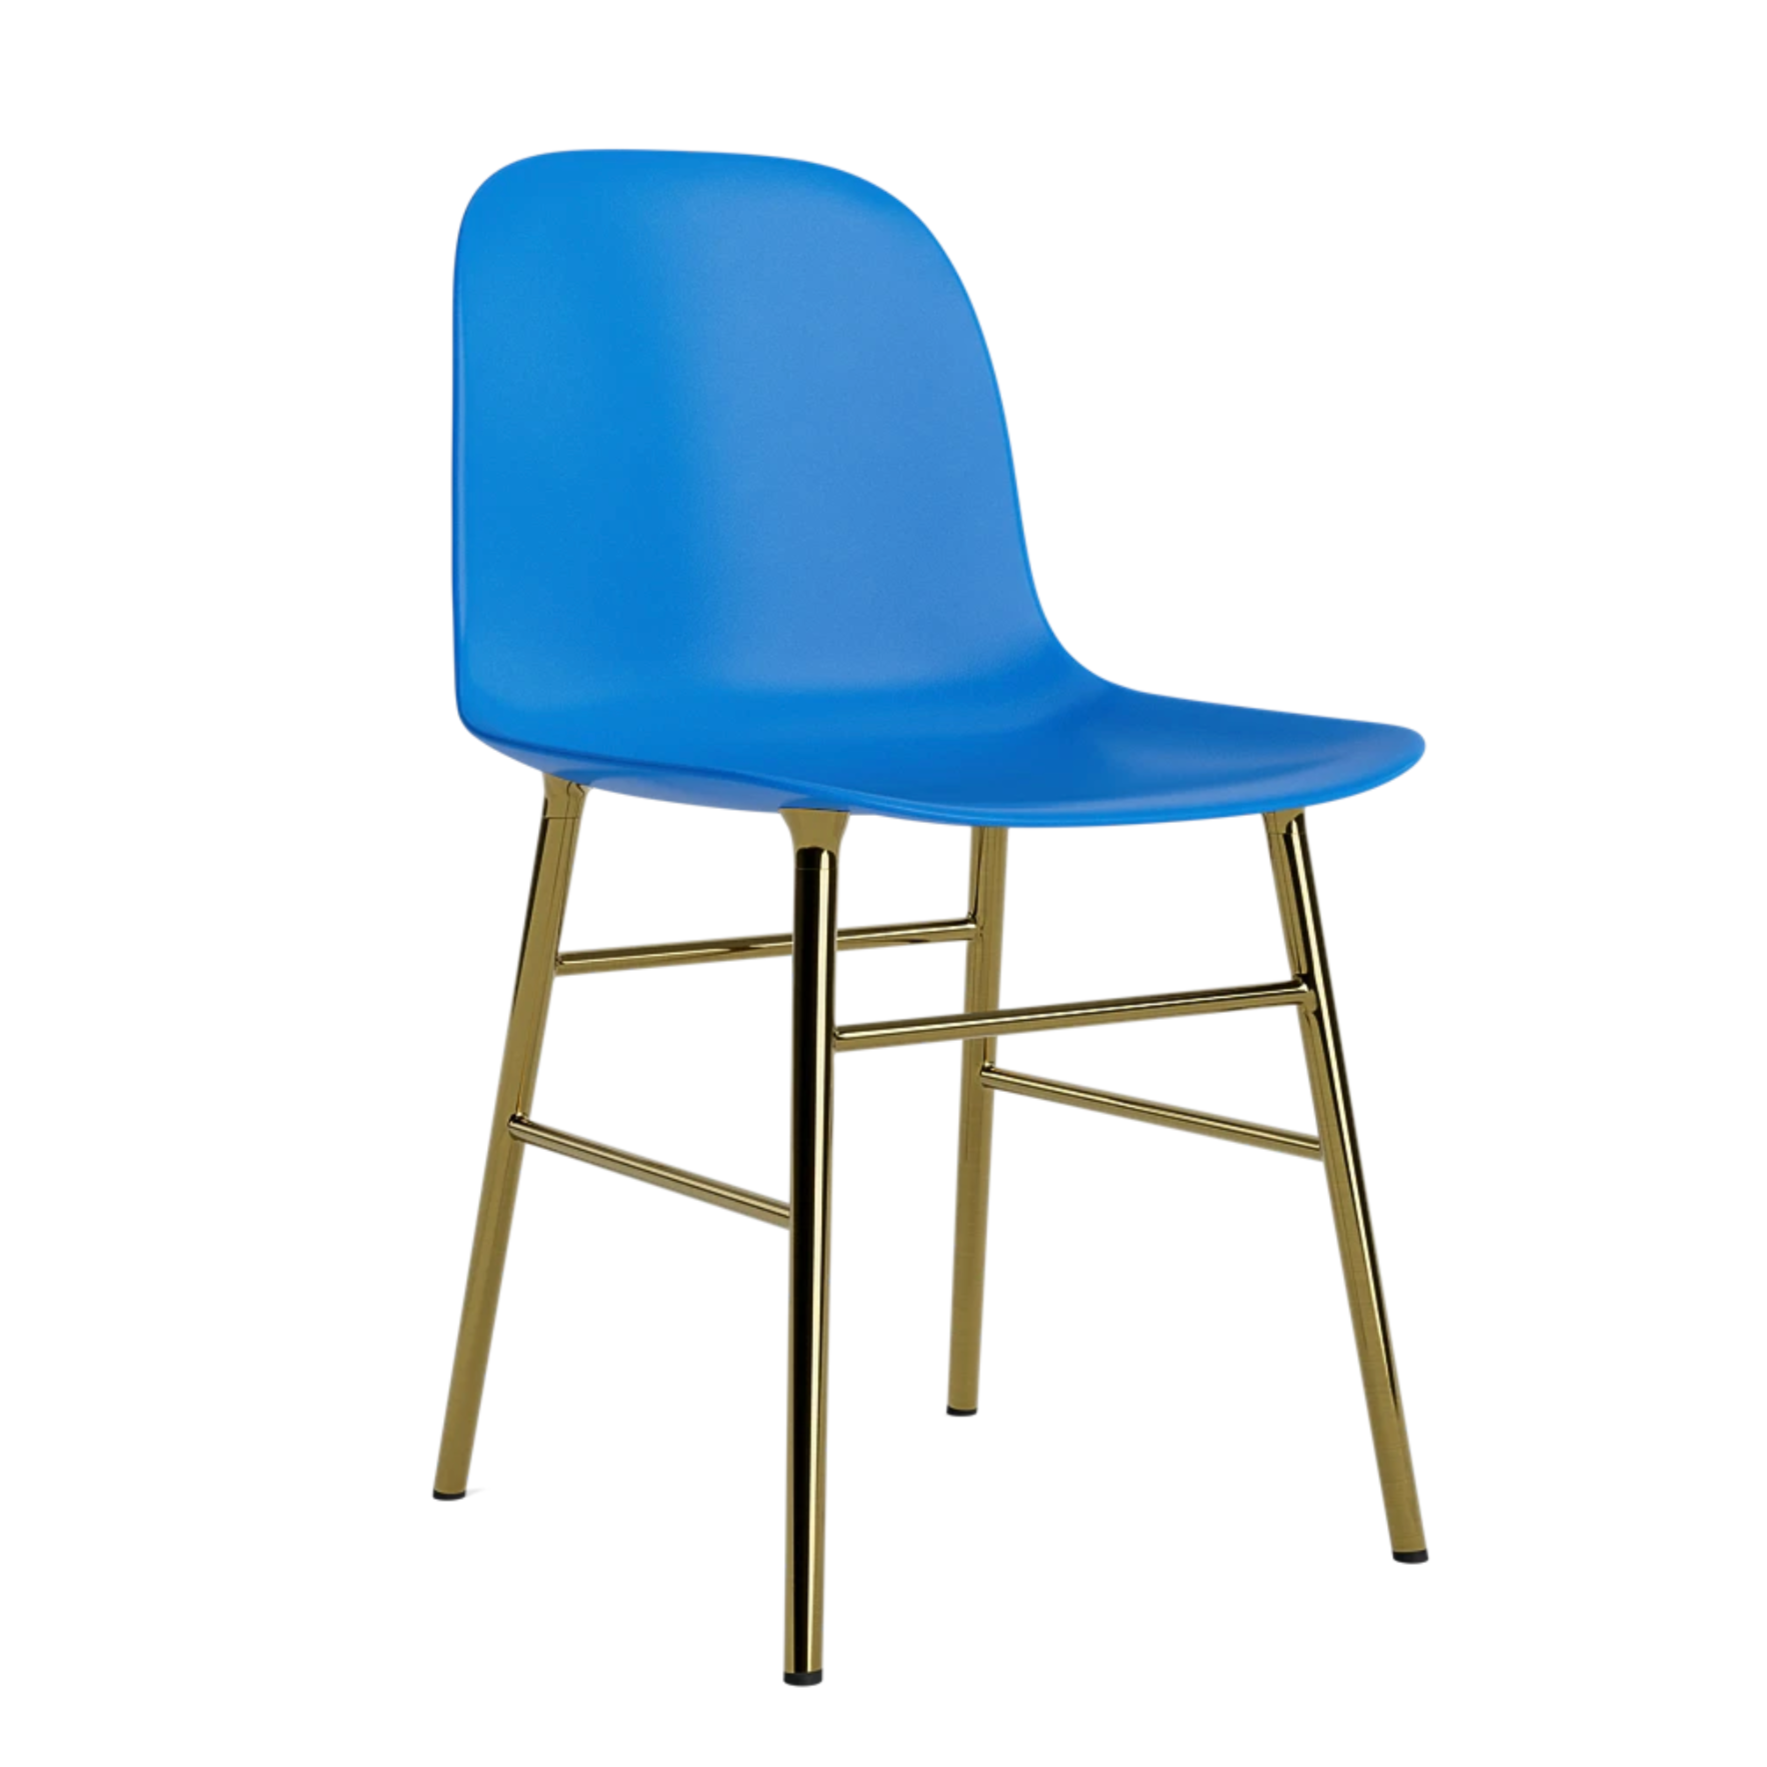 Form Chair - Brass